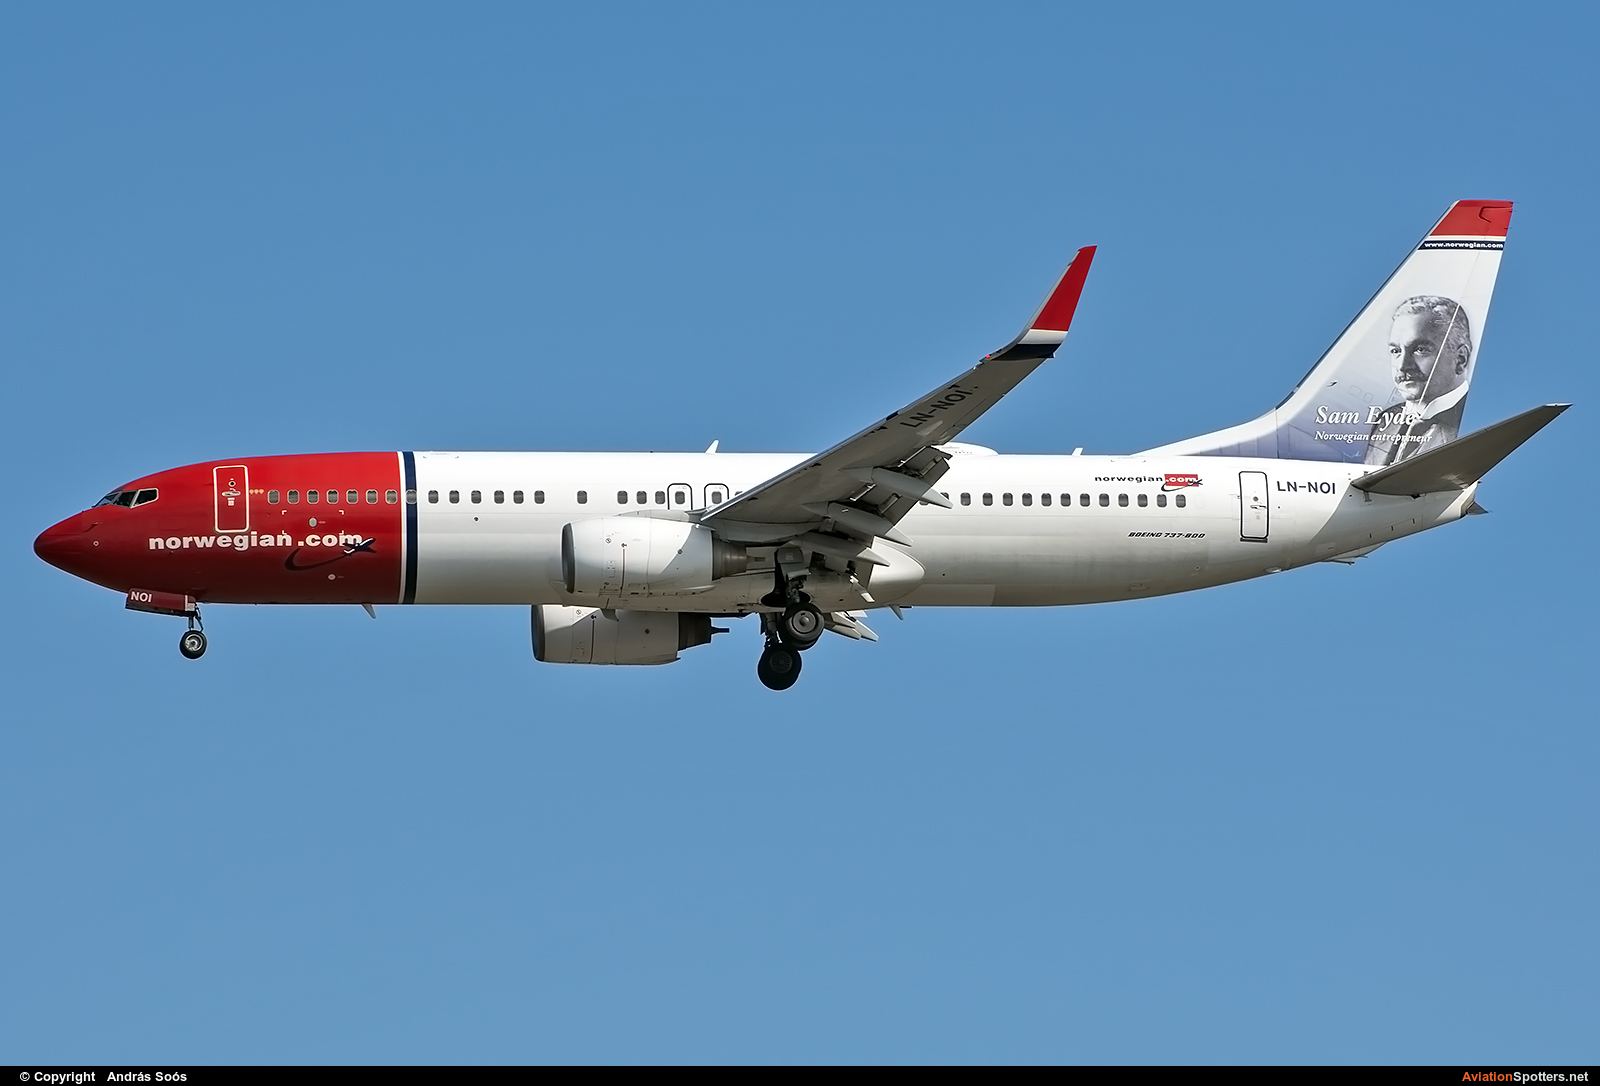 Norwegian Air Shuttle  -  737-800  (LN-NOI) By András Soós (sas1965)